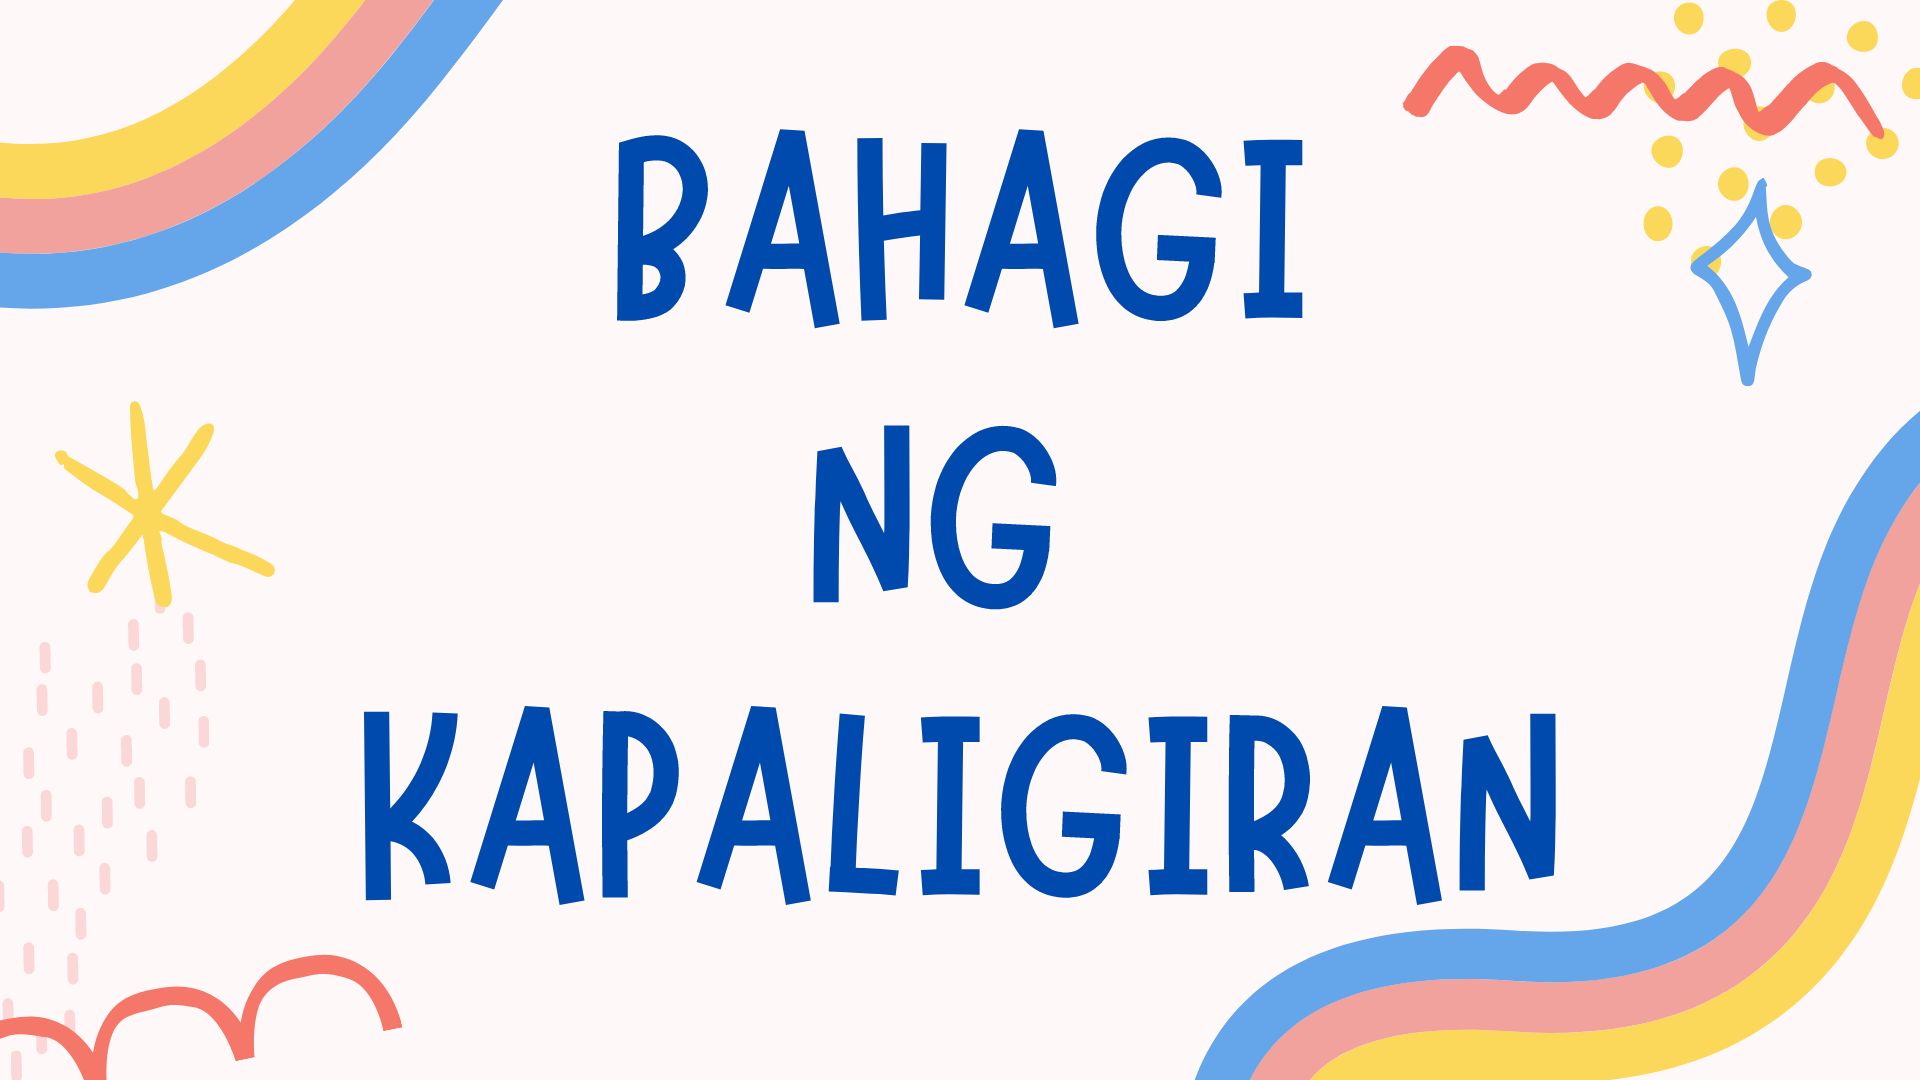 Bahagi ng Kapaligiran questions & answers for quizzes and worksheets ...